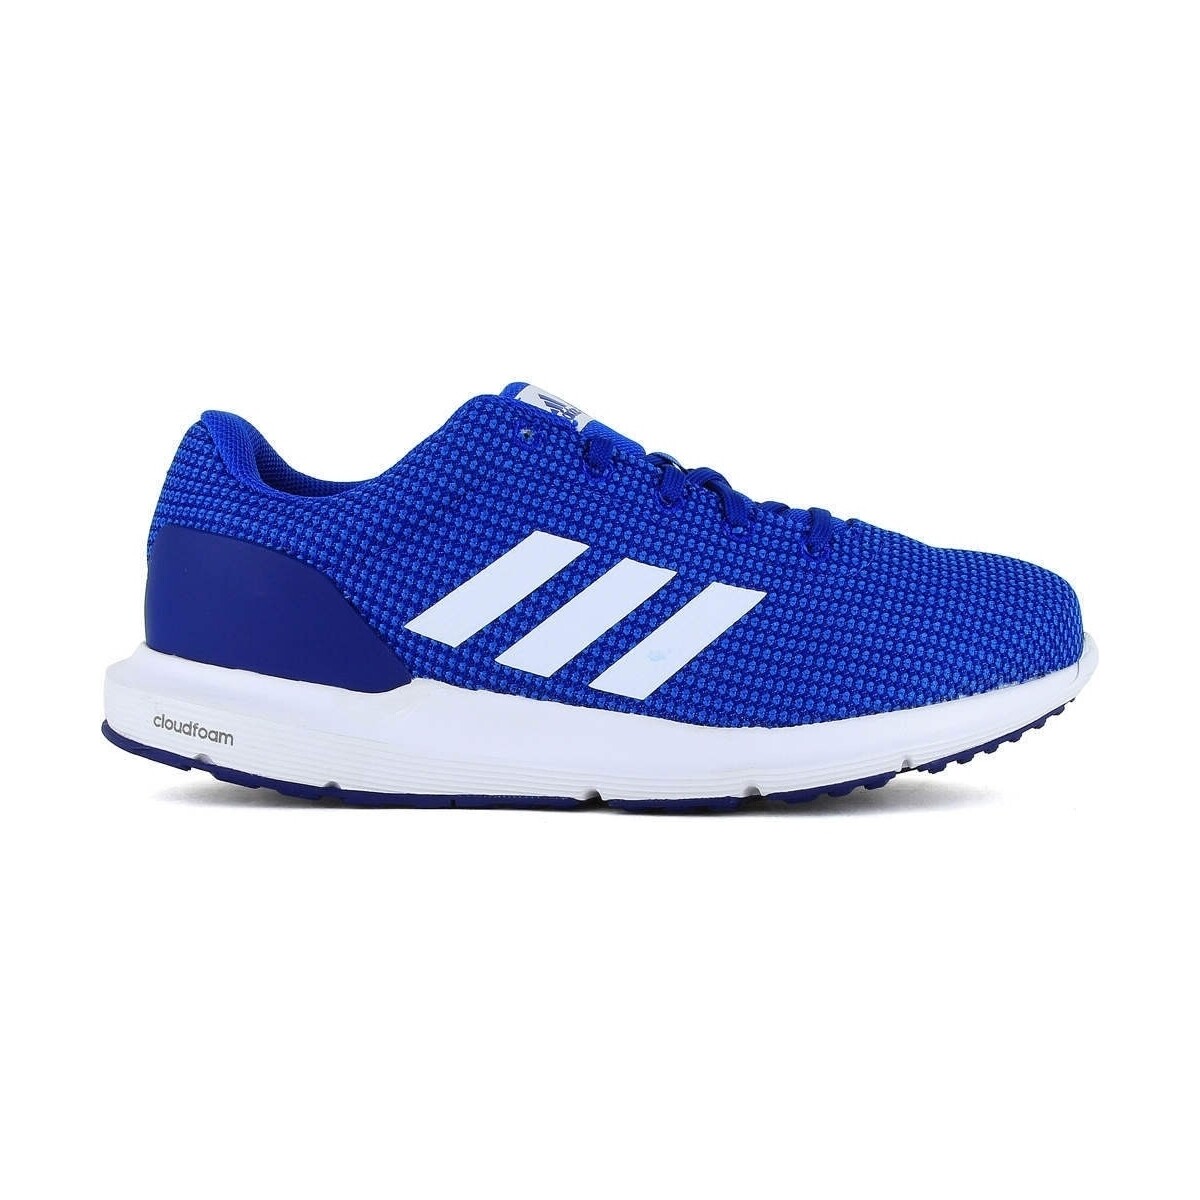 Zapatos Hombre Running / trail adidas Originals COSMIC M Azul